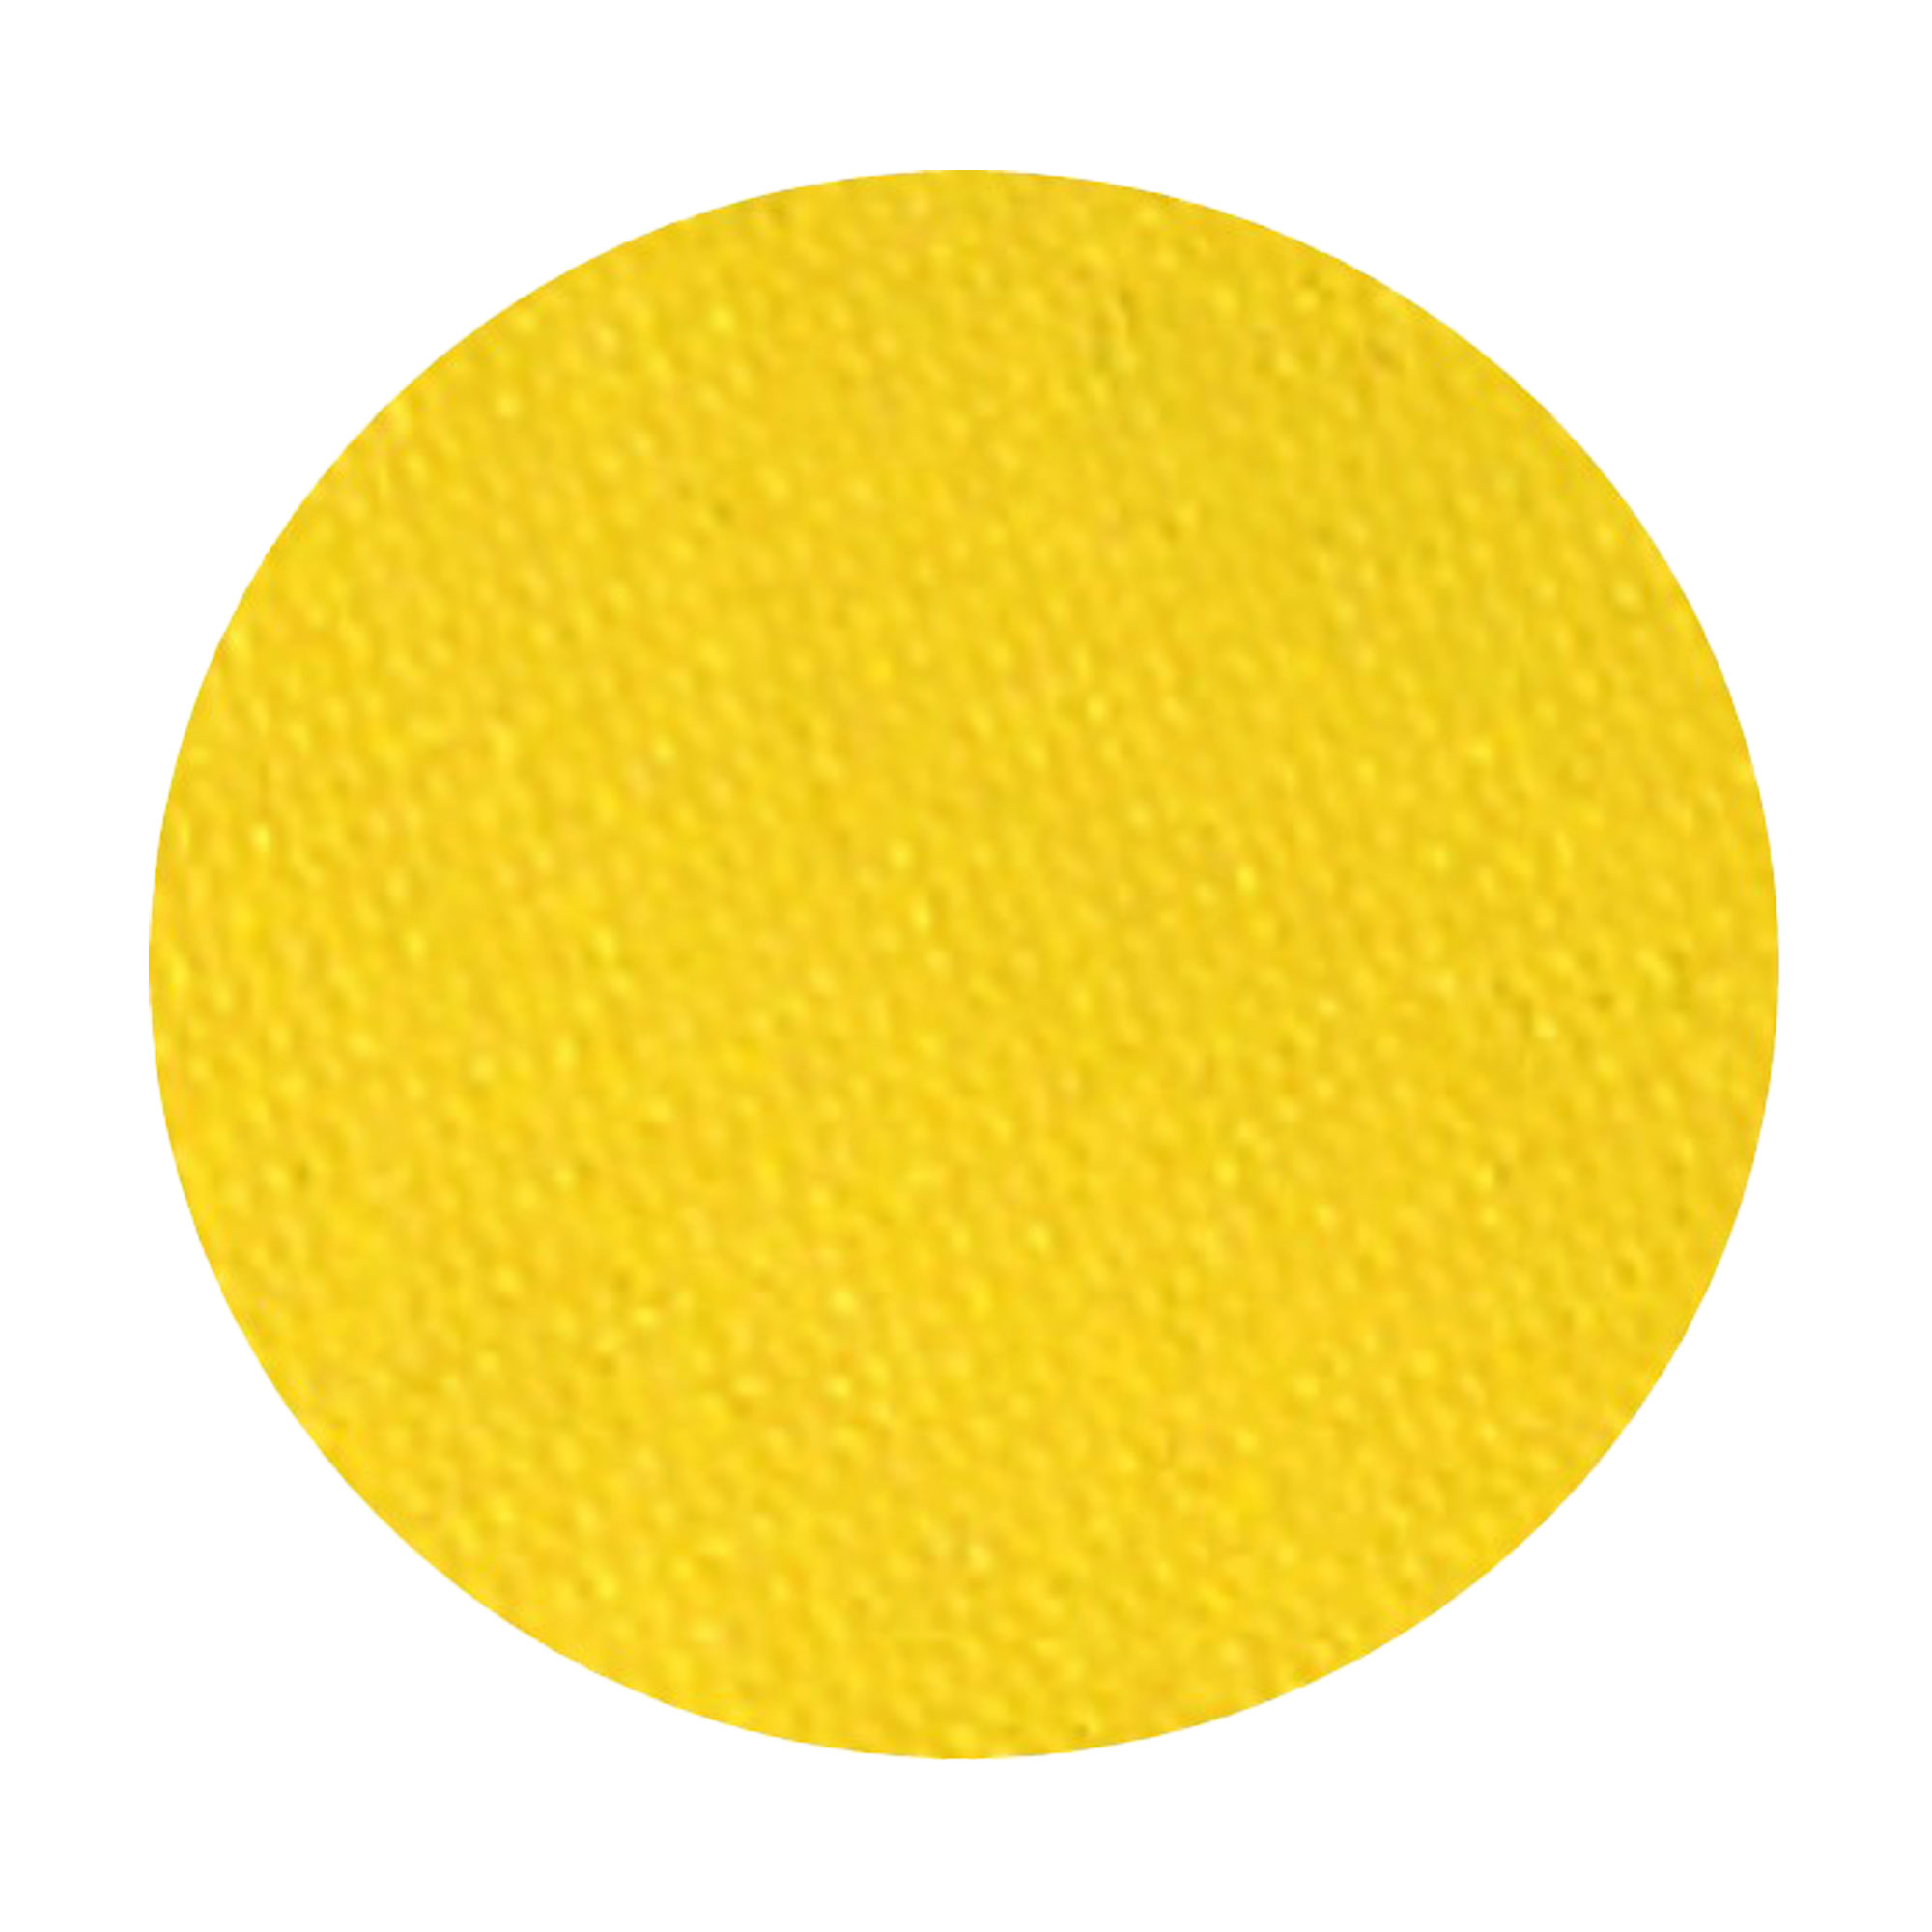 Kinesiologie Tape 5 cm x 5 m gelb